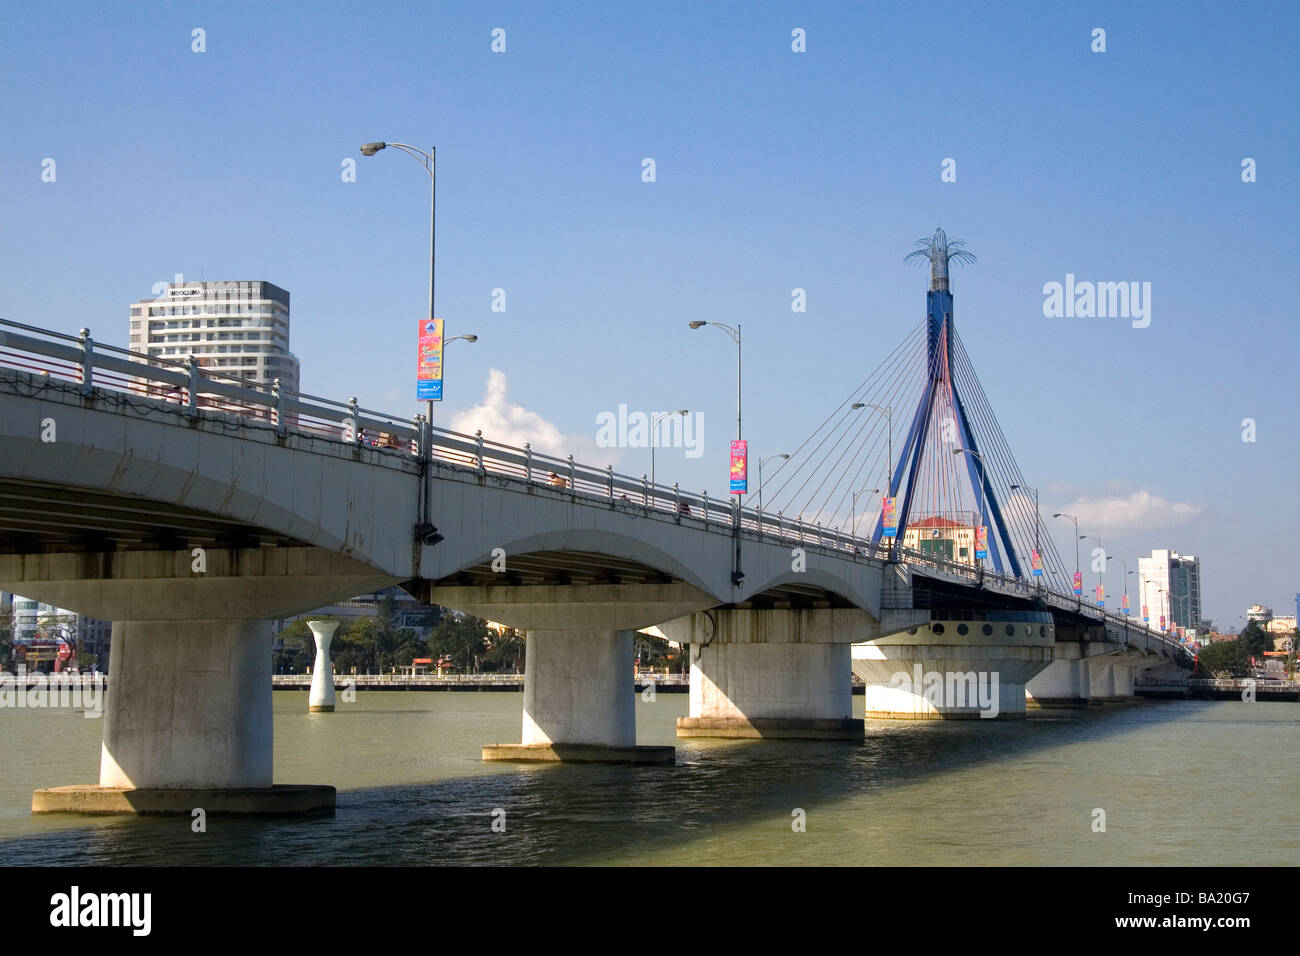 The Thuan Phuoc Bridge spanning the Han River in the port city of Da Nang Vietnam Stock Photo